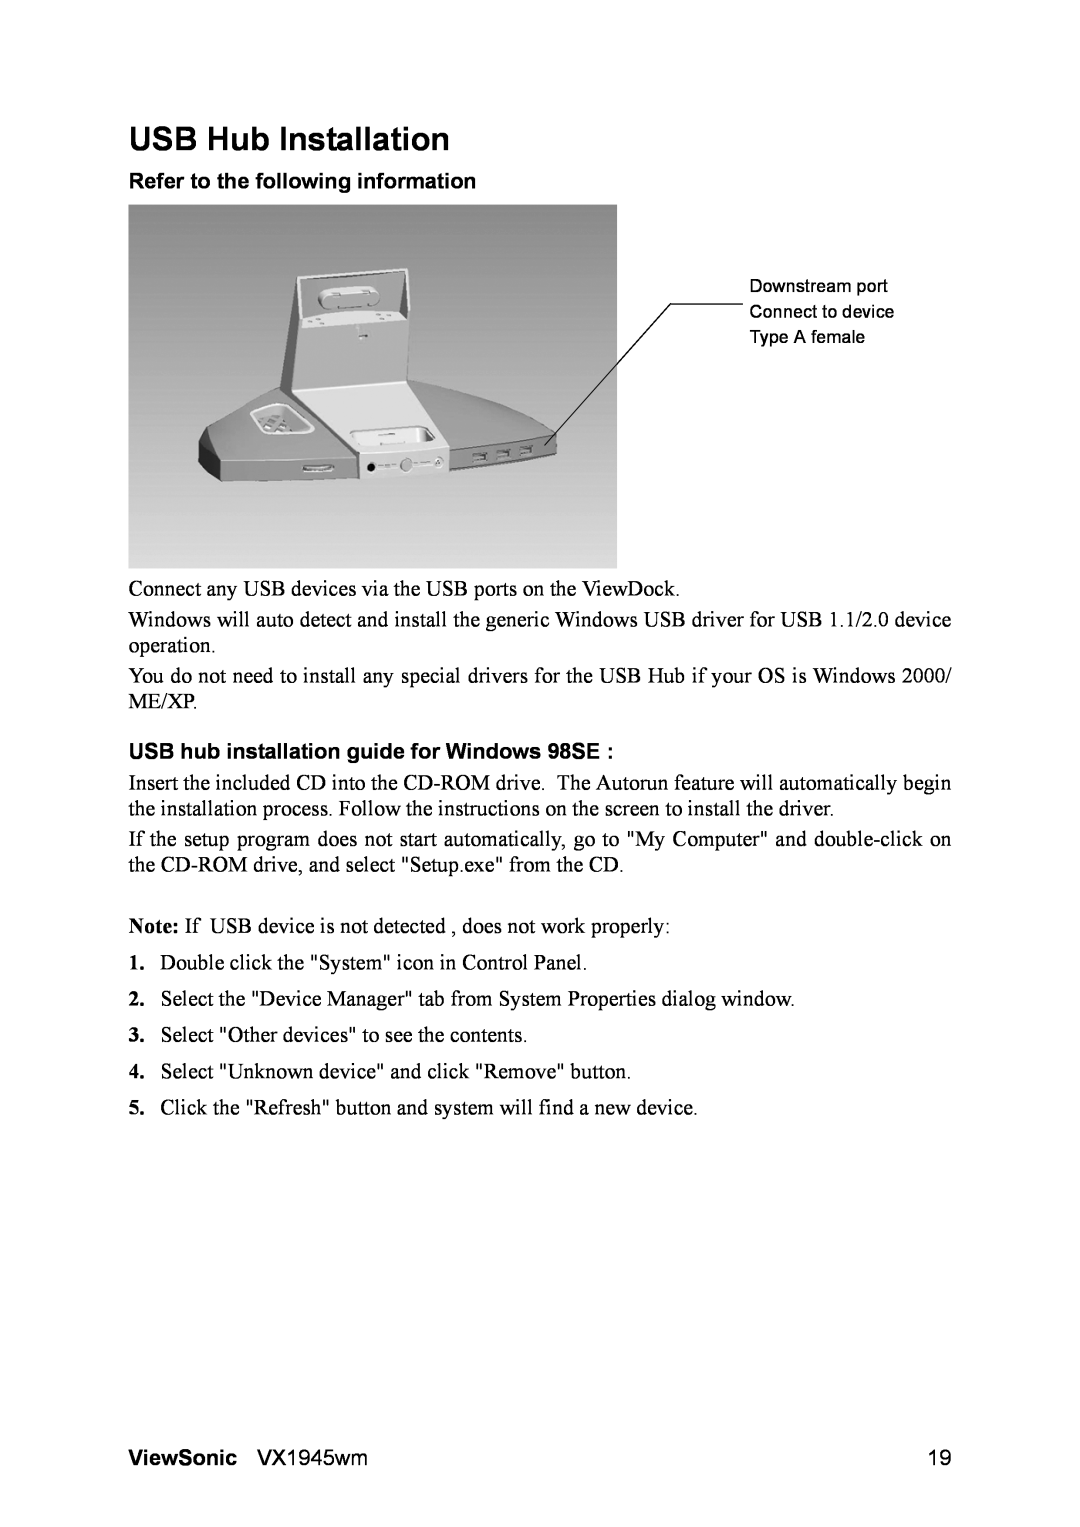 ViewSonic VS11444 USB Hub Installation, USB hub installation guide for Windows 98SE, Refer to the following information 